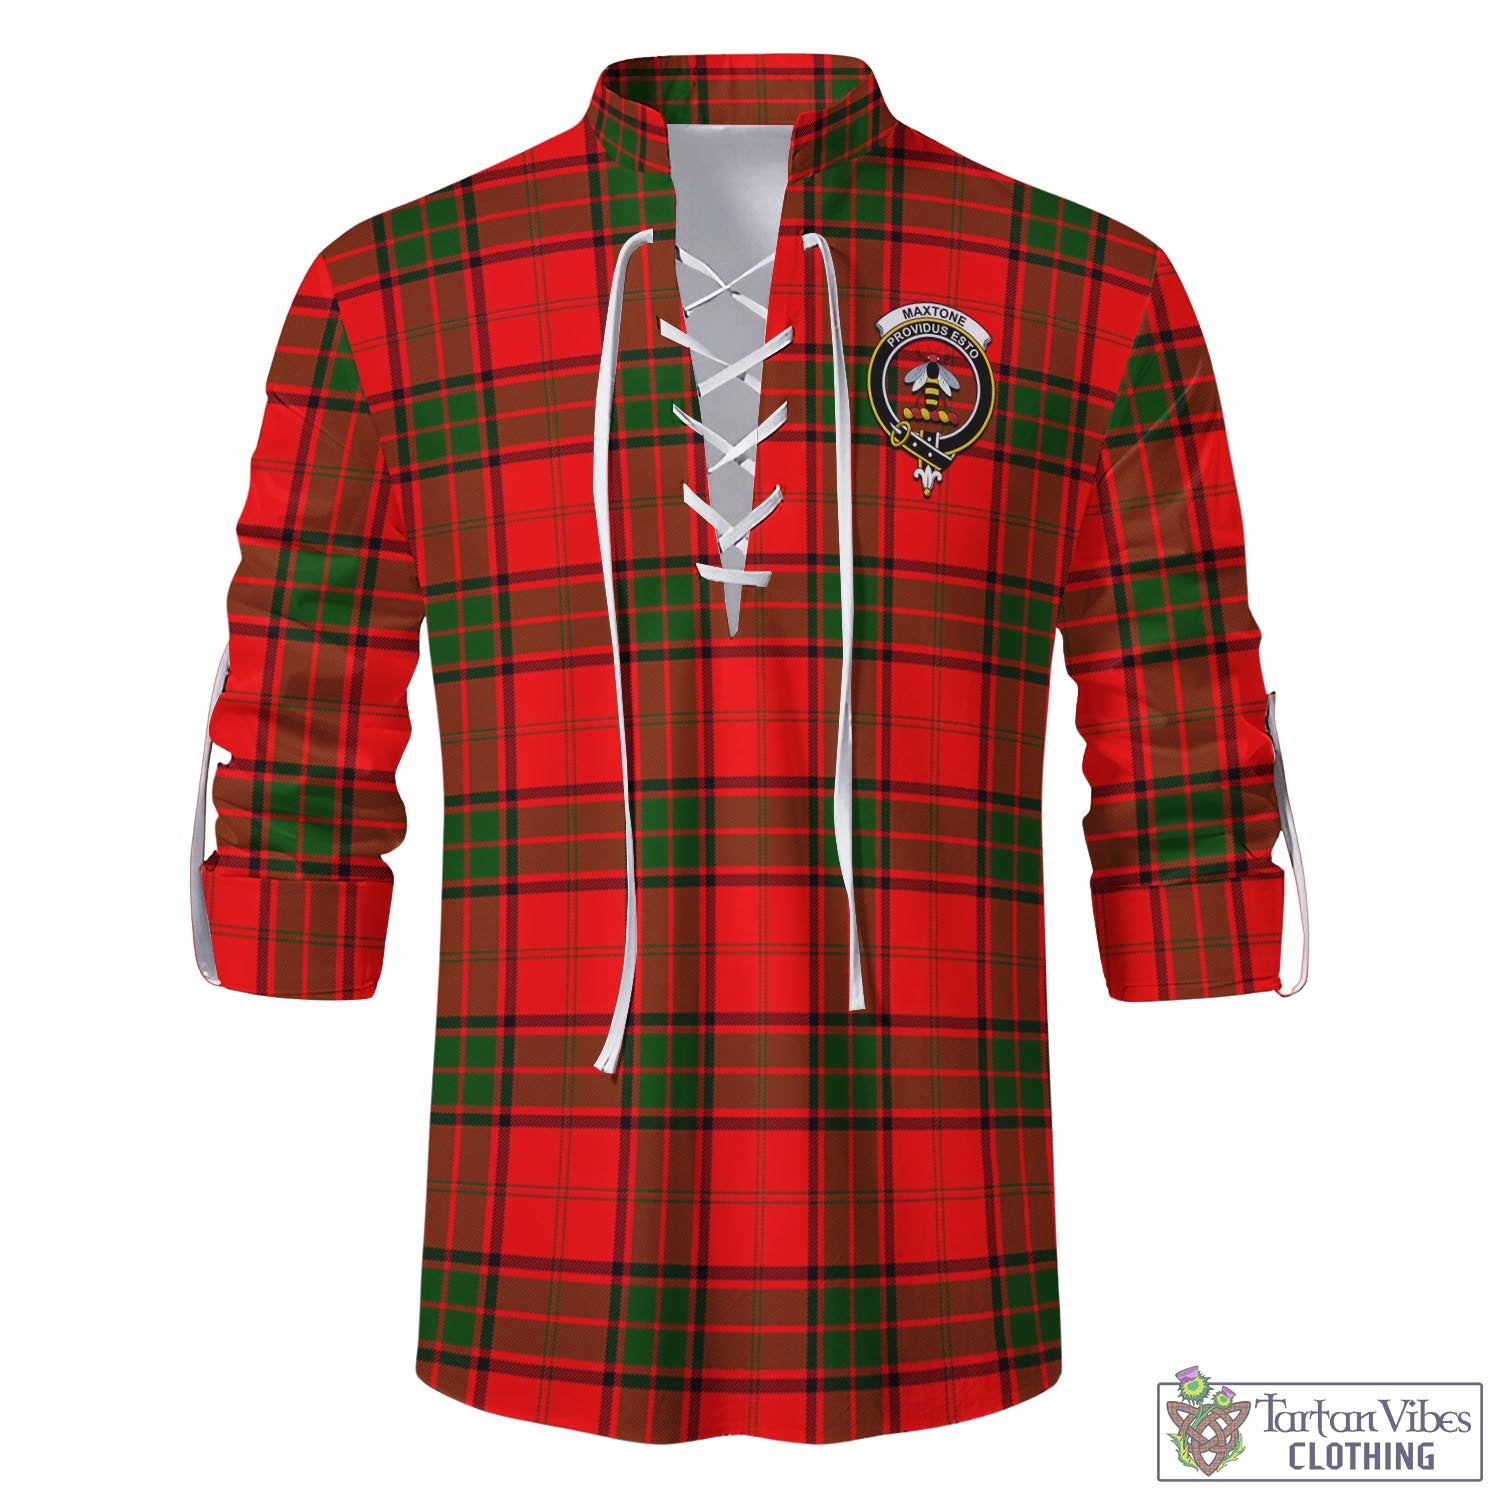 Tartan Vibes Clothing Maxtone Tartan Men's Scottish Traditional Jacobite Ghillie Kilt Shirt with Family Crest